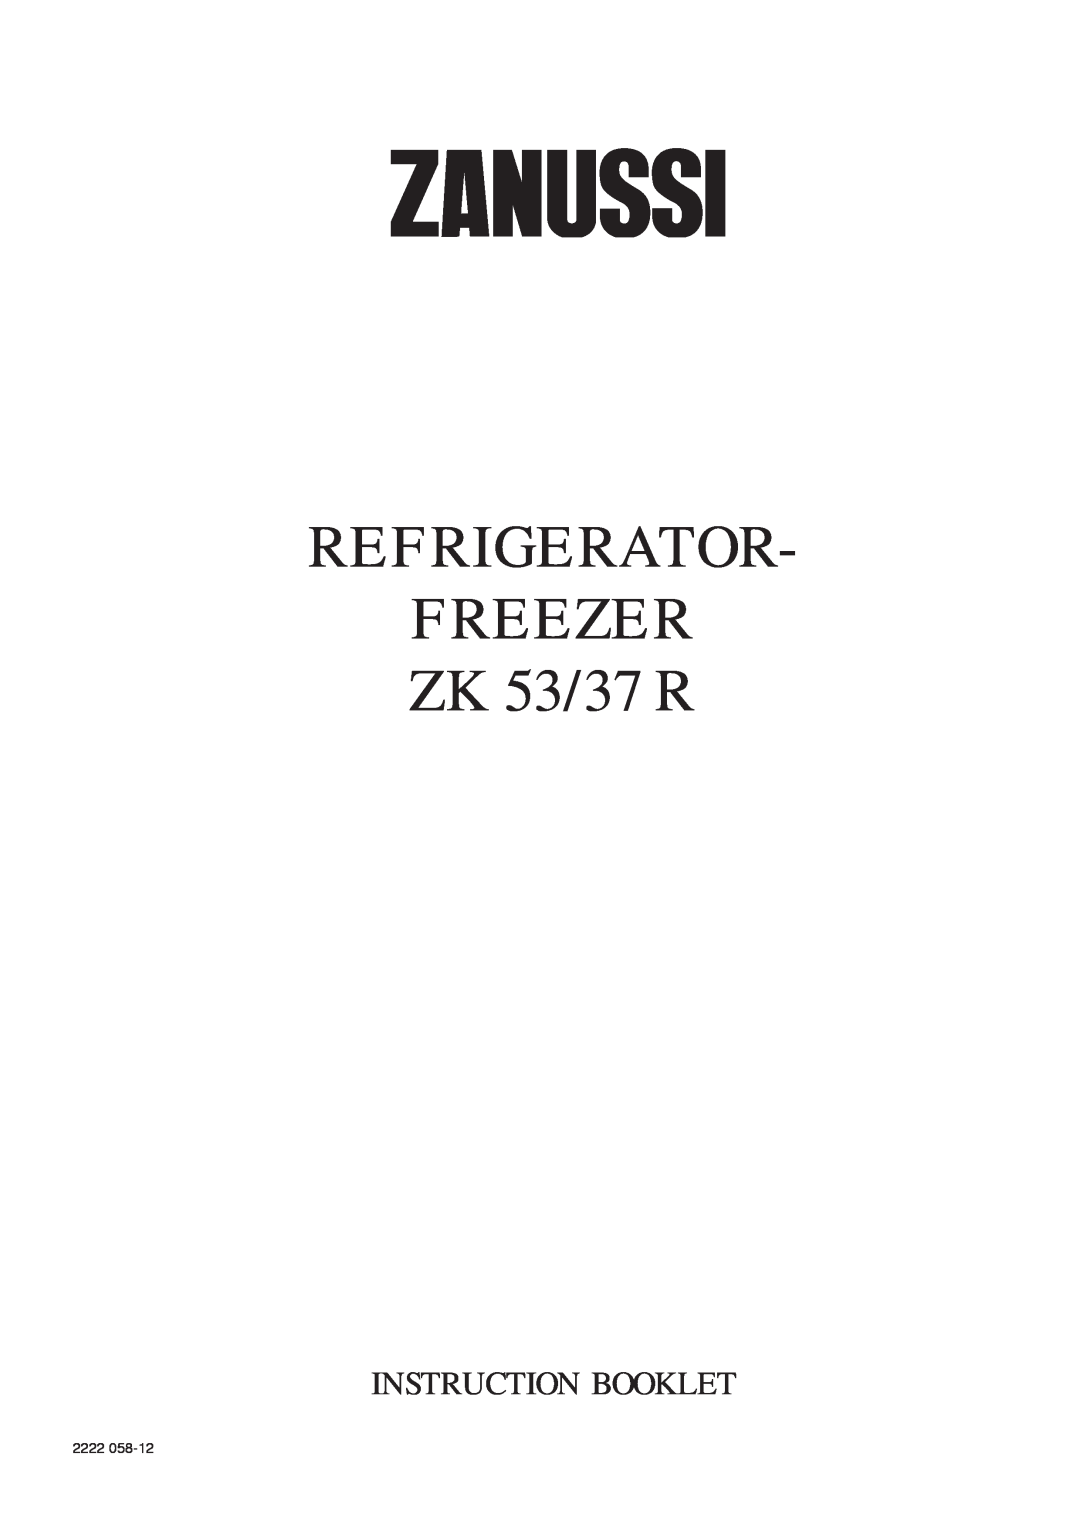 Zanussi manual REFRIGERATOR FREEZER ZK 53/37 R, Instruction Booklet, 2222 